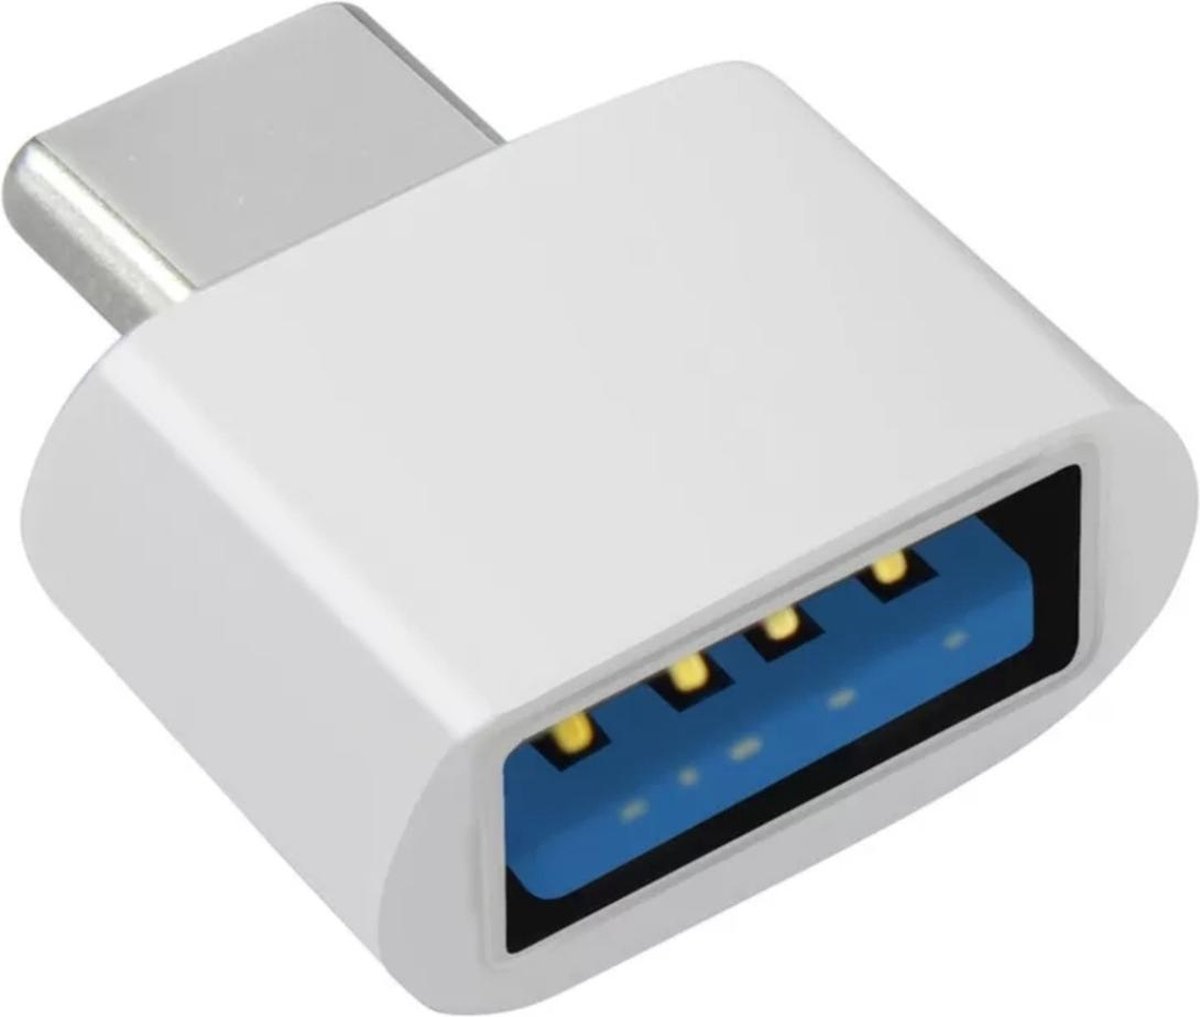 USB vers USB C - Adaptateur USB - BLANC - Convertisseur de petite clé USB -  Hub USB